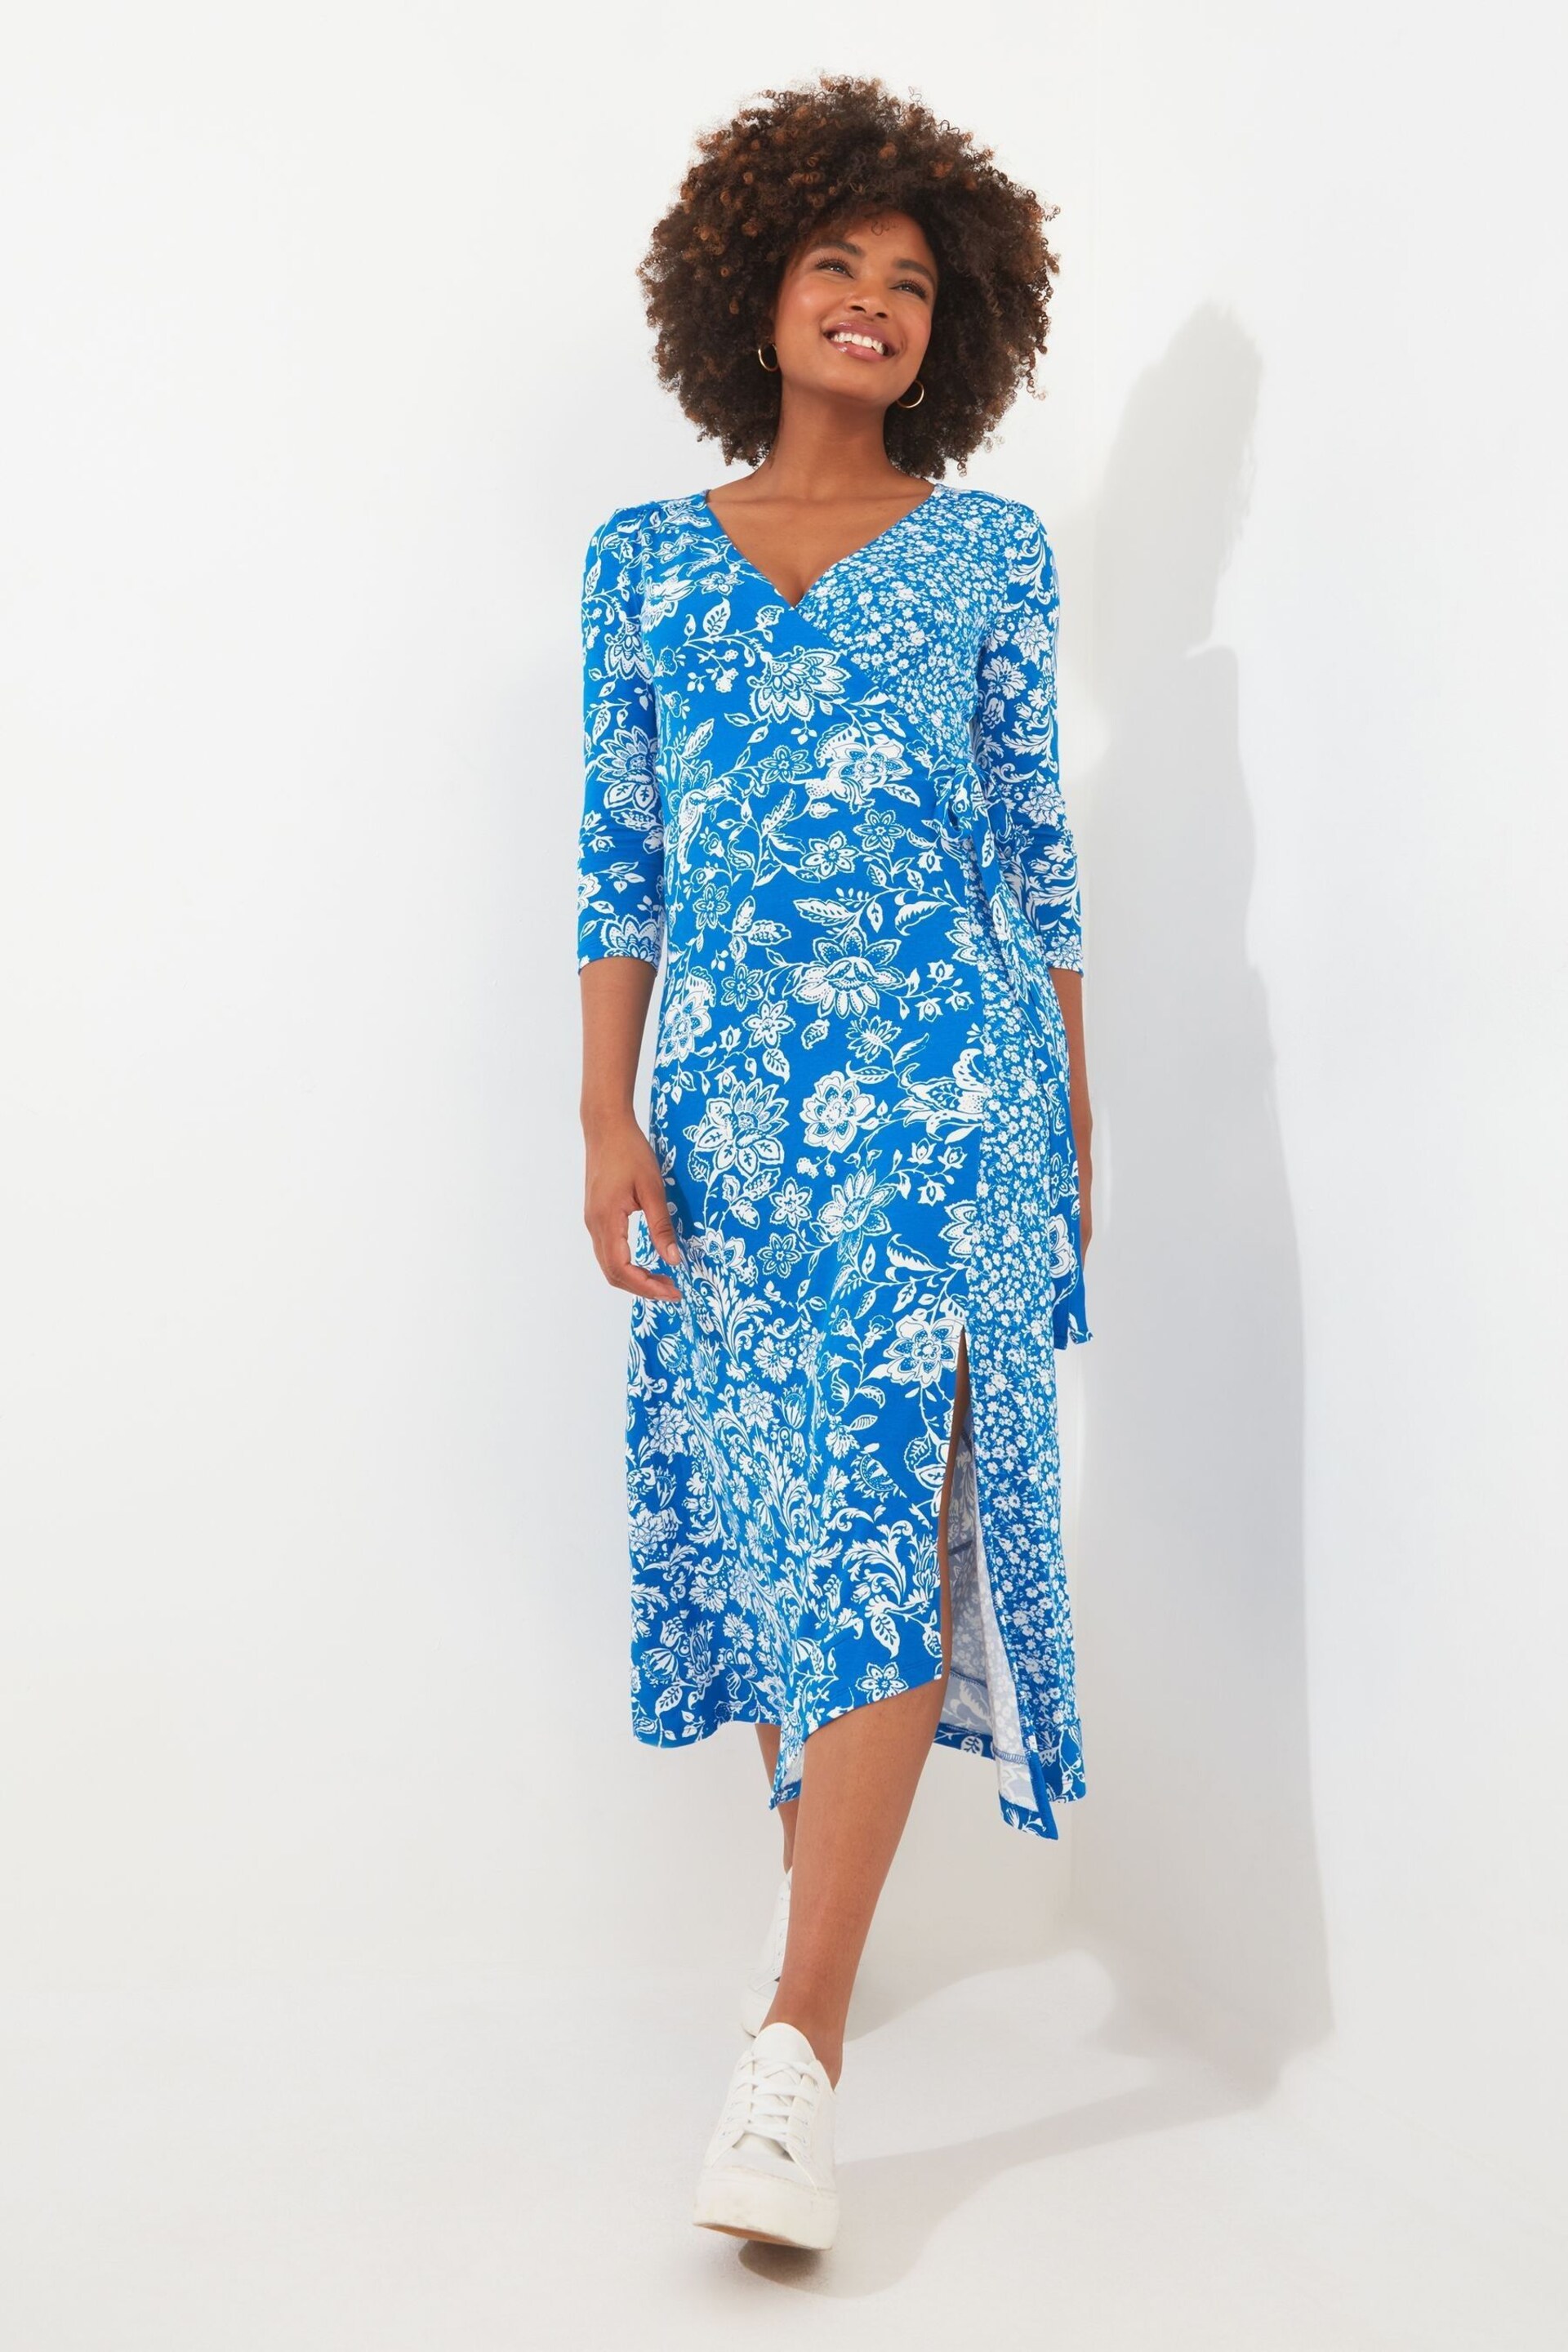 Joe Browns Blue Mixed Print Jersey Dress - Image 5 of 7